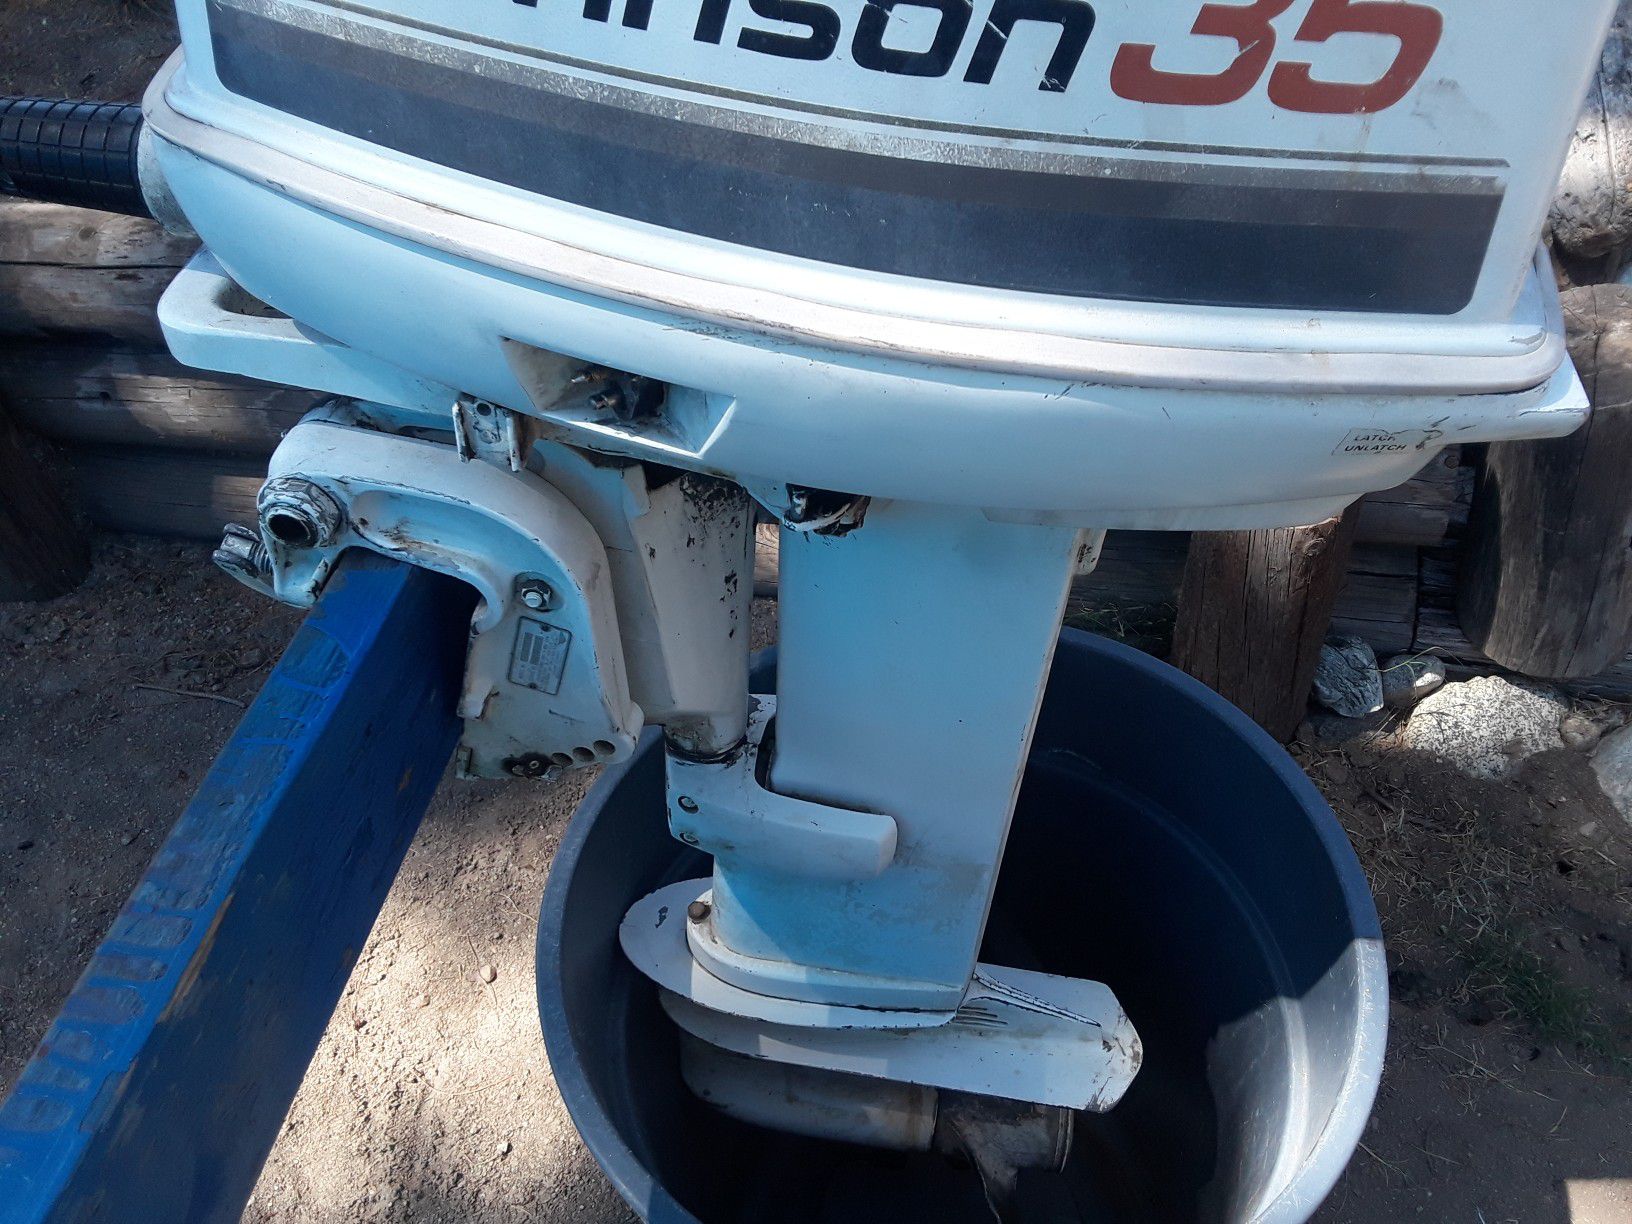 35 hp Johnson seahorse outboard motor